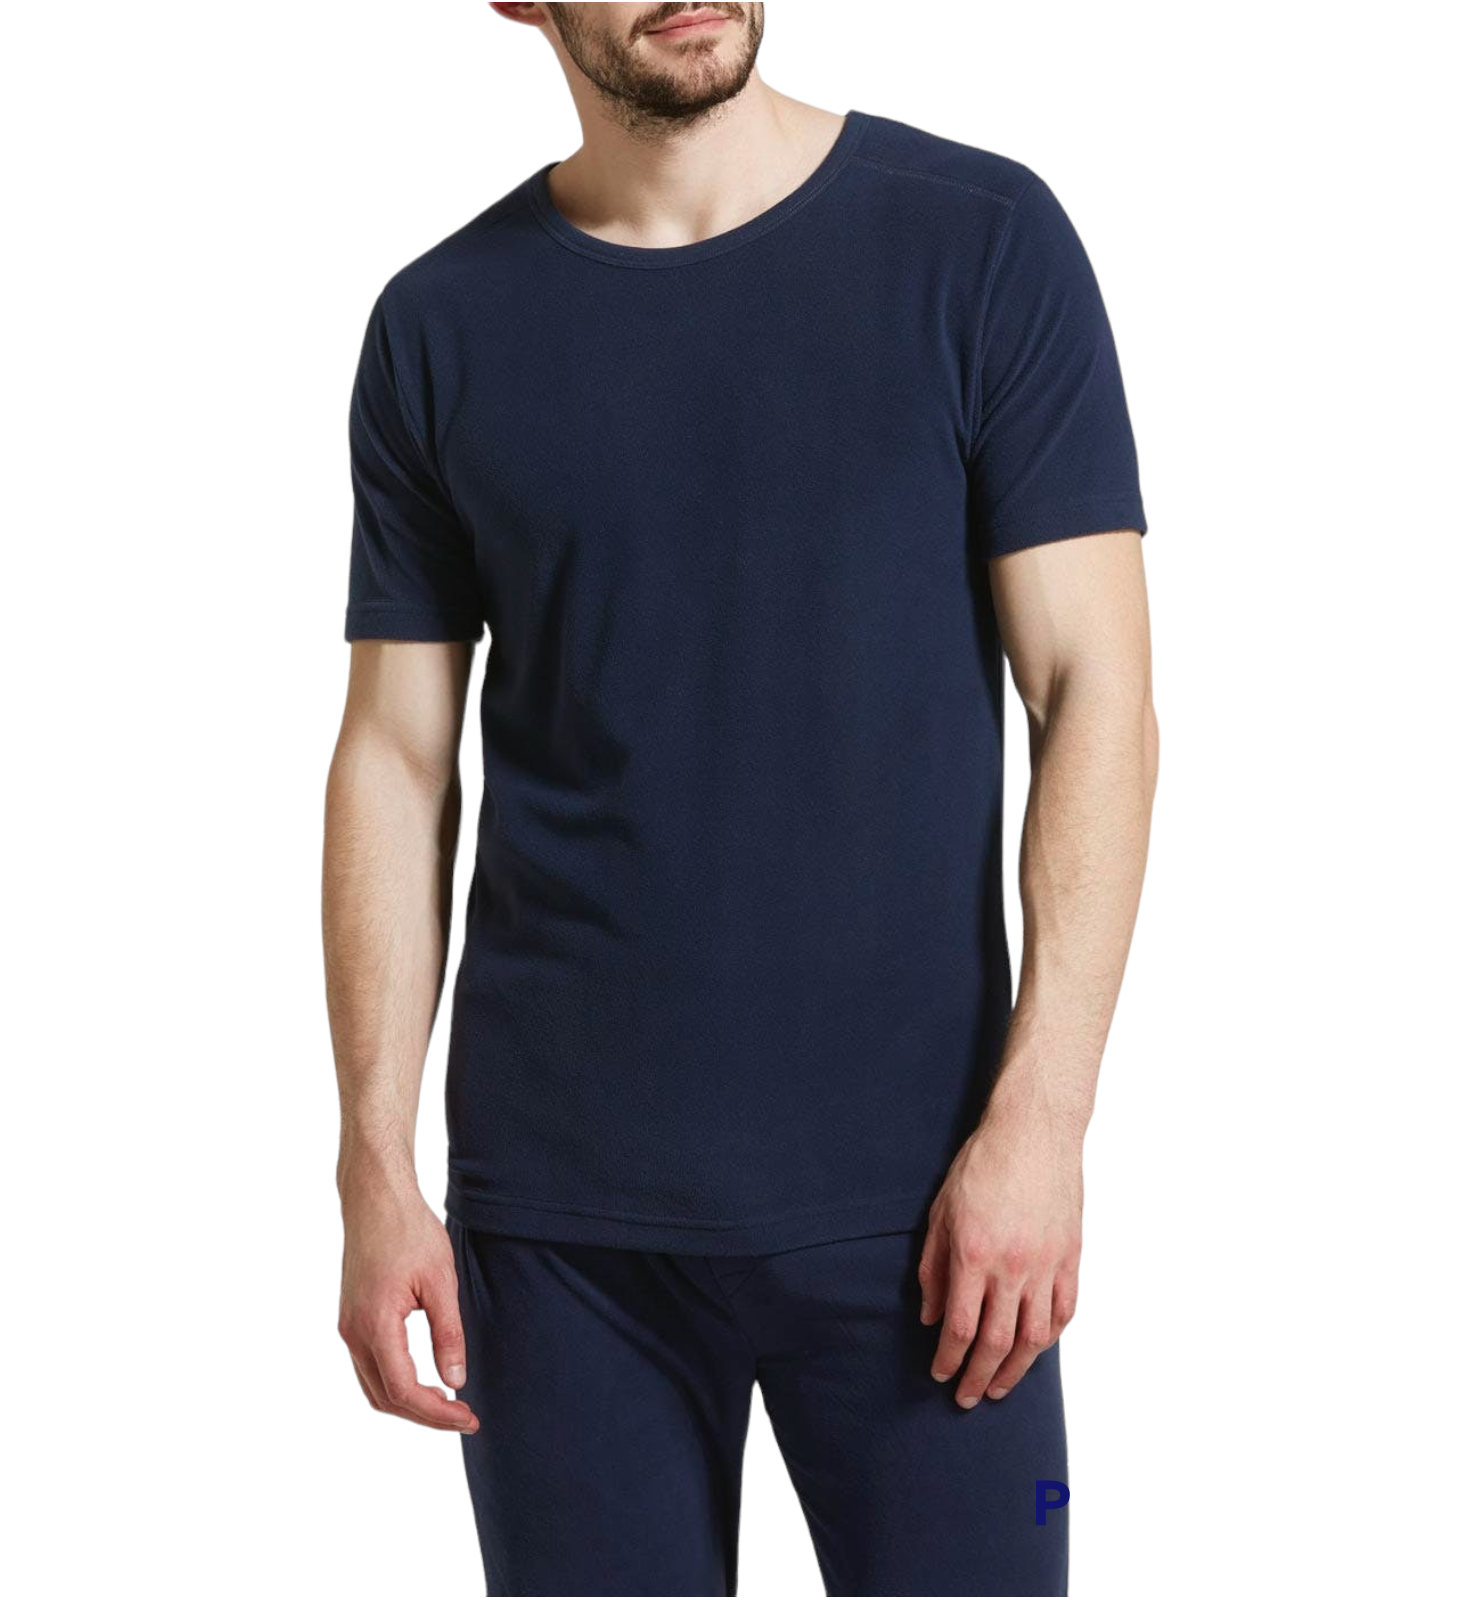 Mens Thermal Short Sleeve Top Microfleece Baselayer Underwear T Shirt - Navy - L